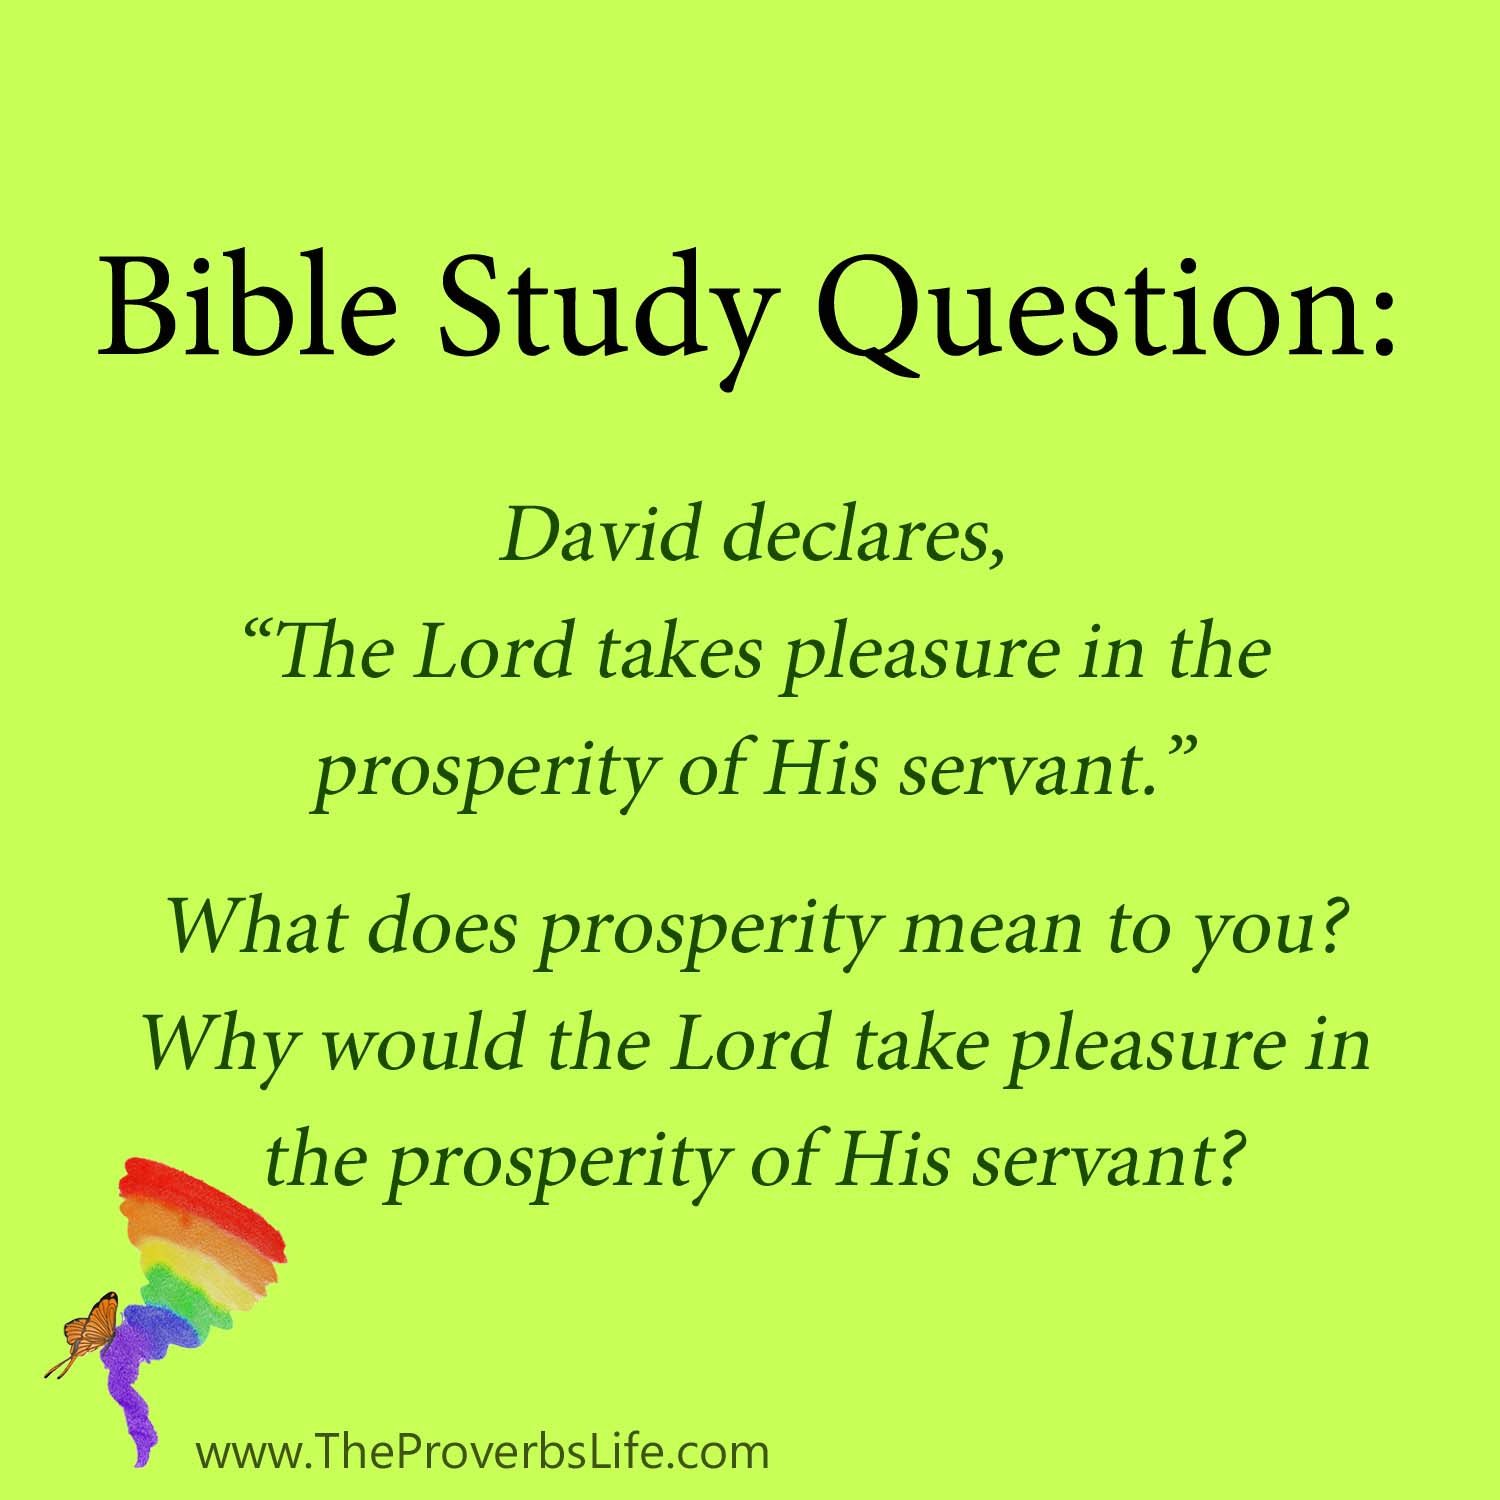 bible study question - prosperity of His servant